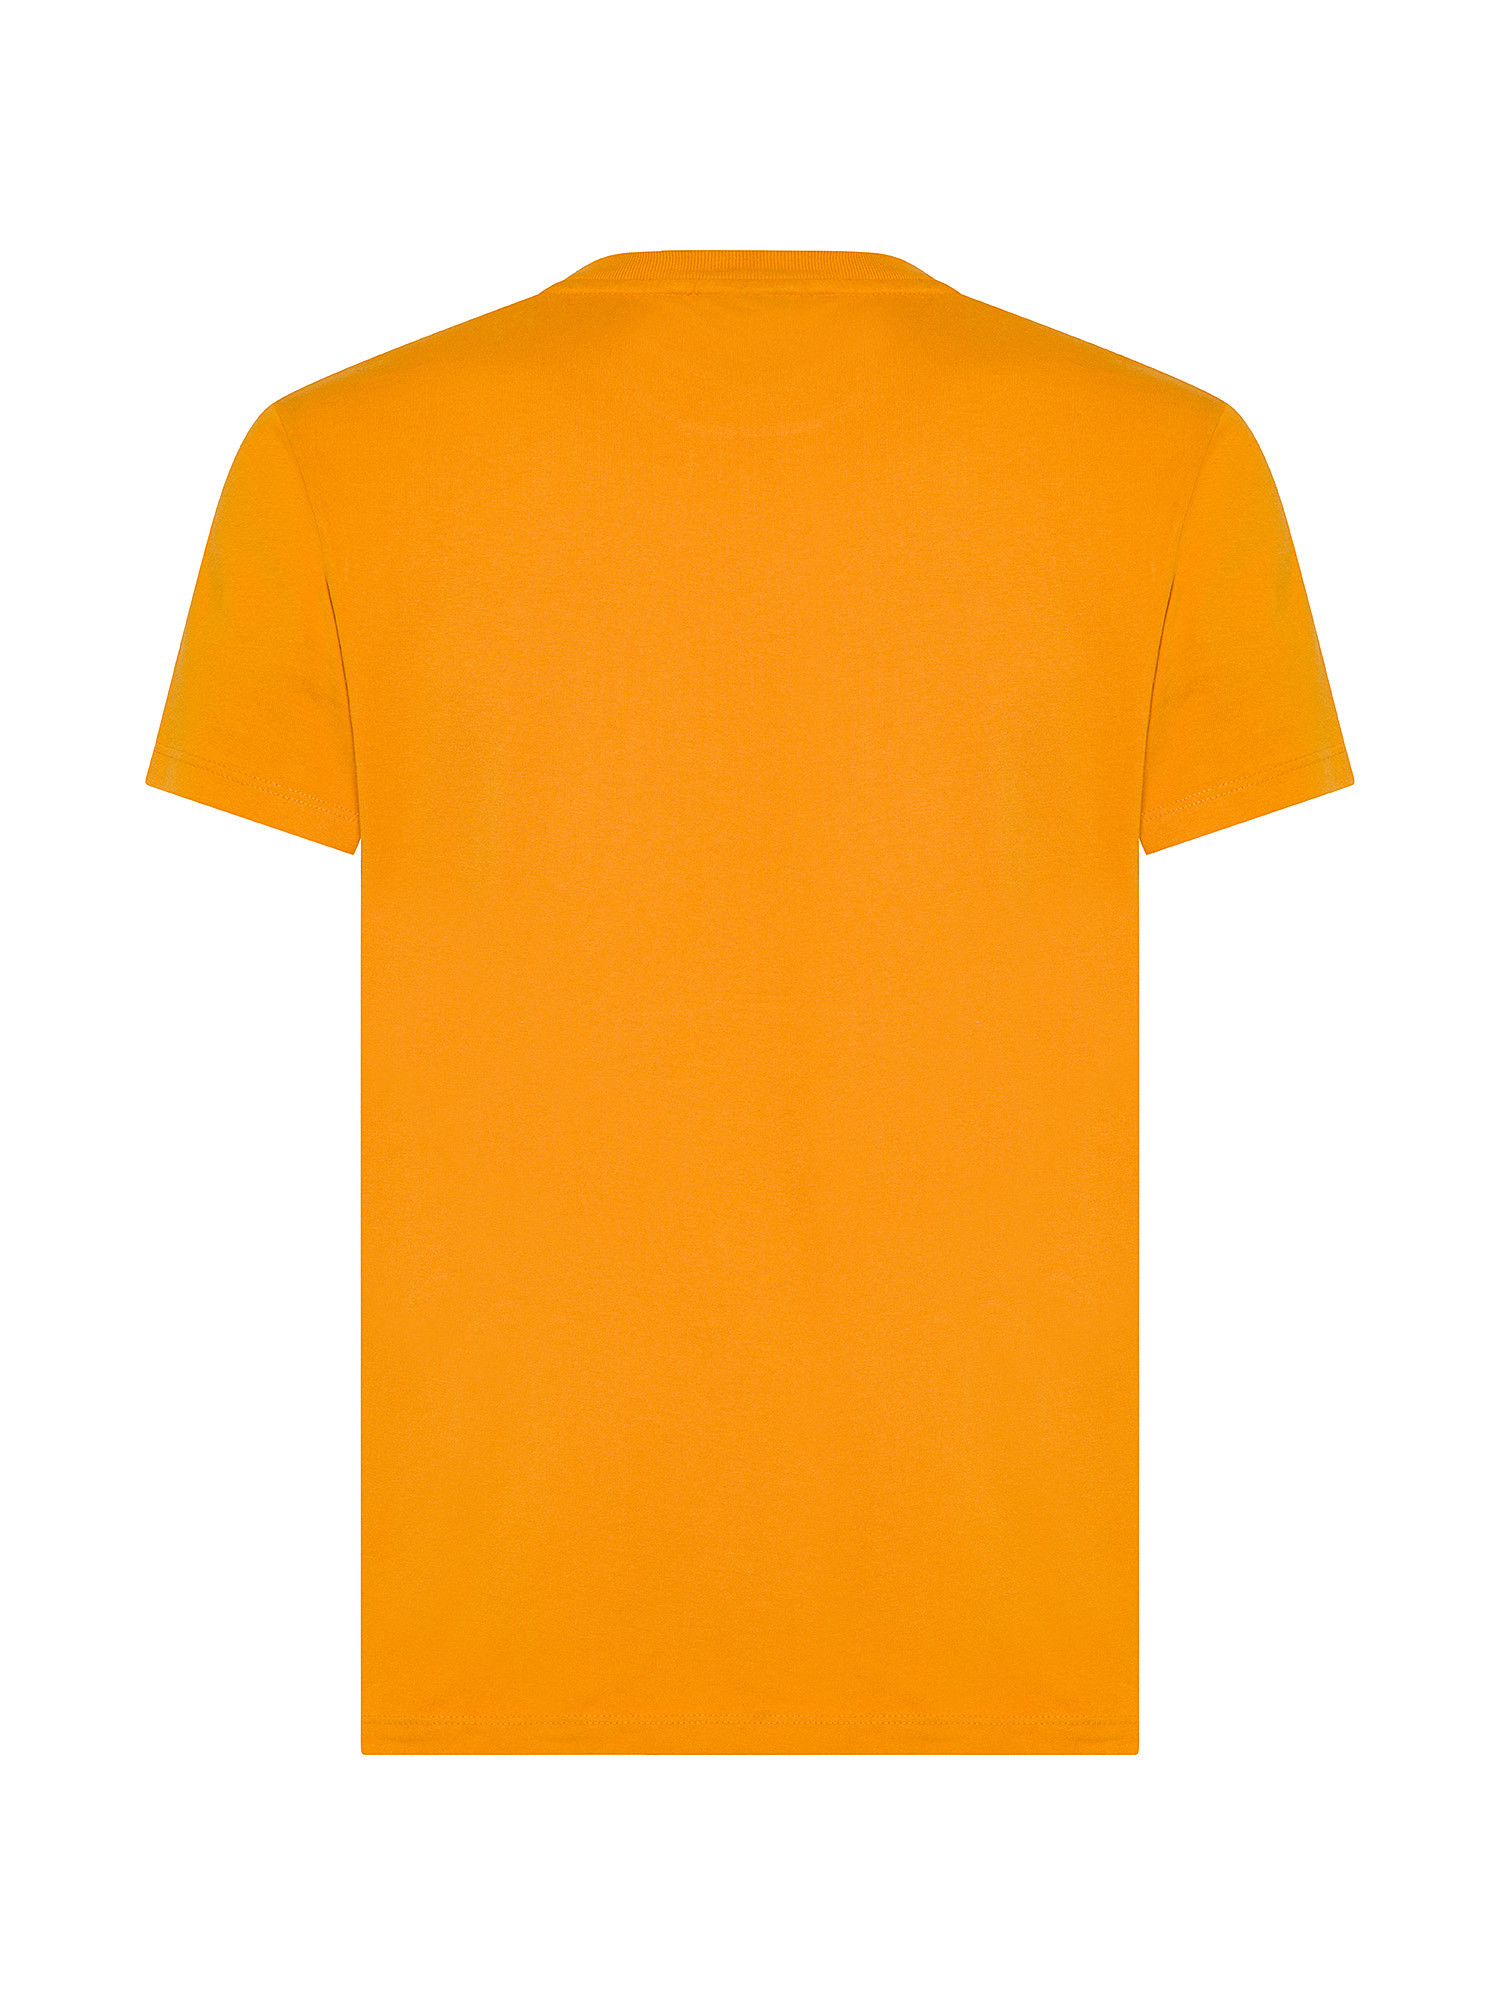 Superdry - T-shirt girocollo con logo, Arancione, large image number 1